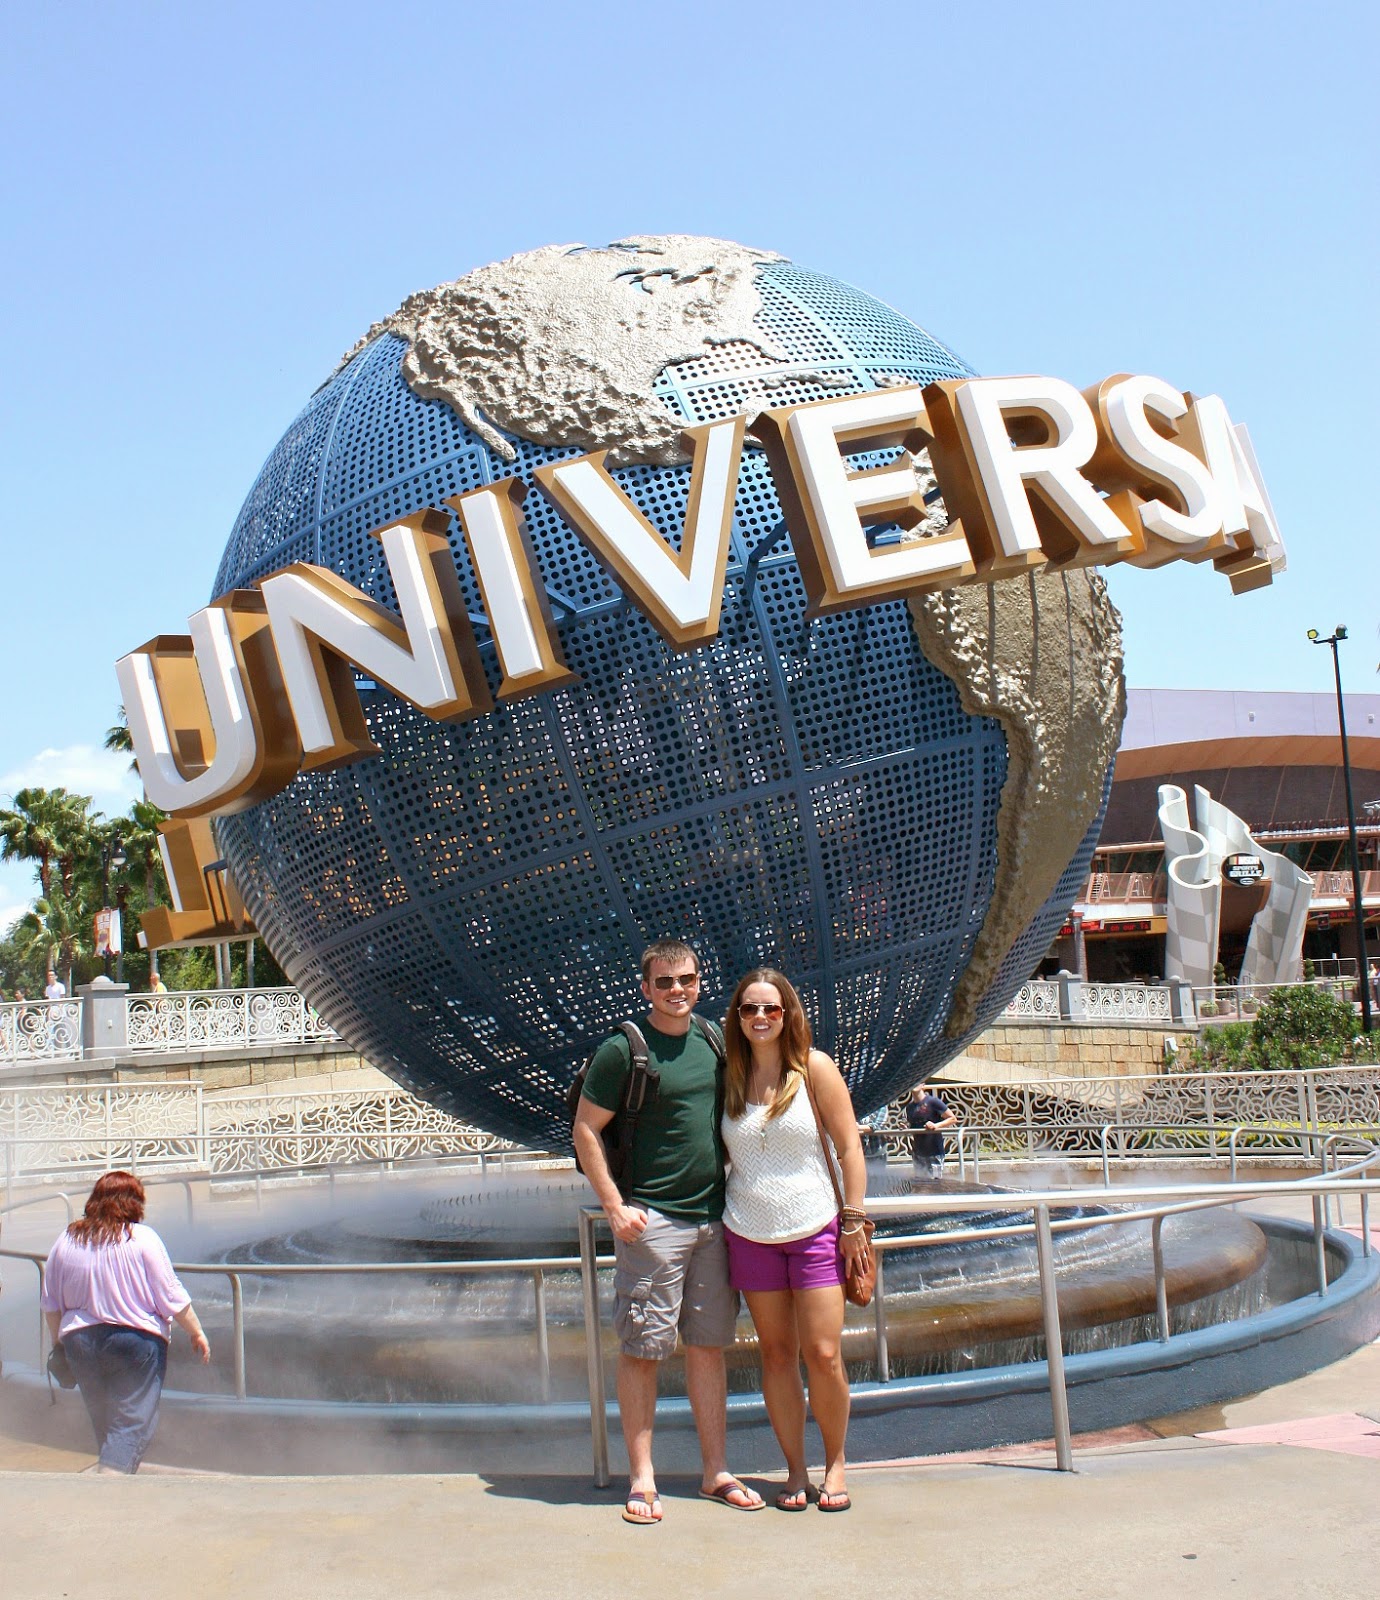 Florida: Disney World Time In Orlando (The Final Half)